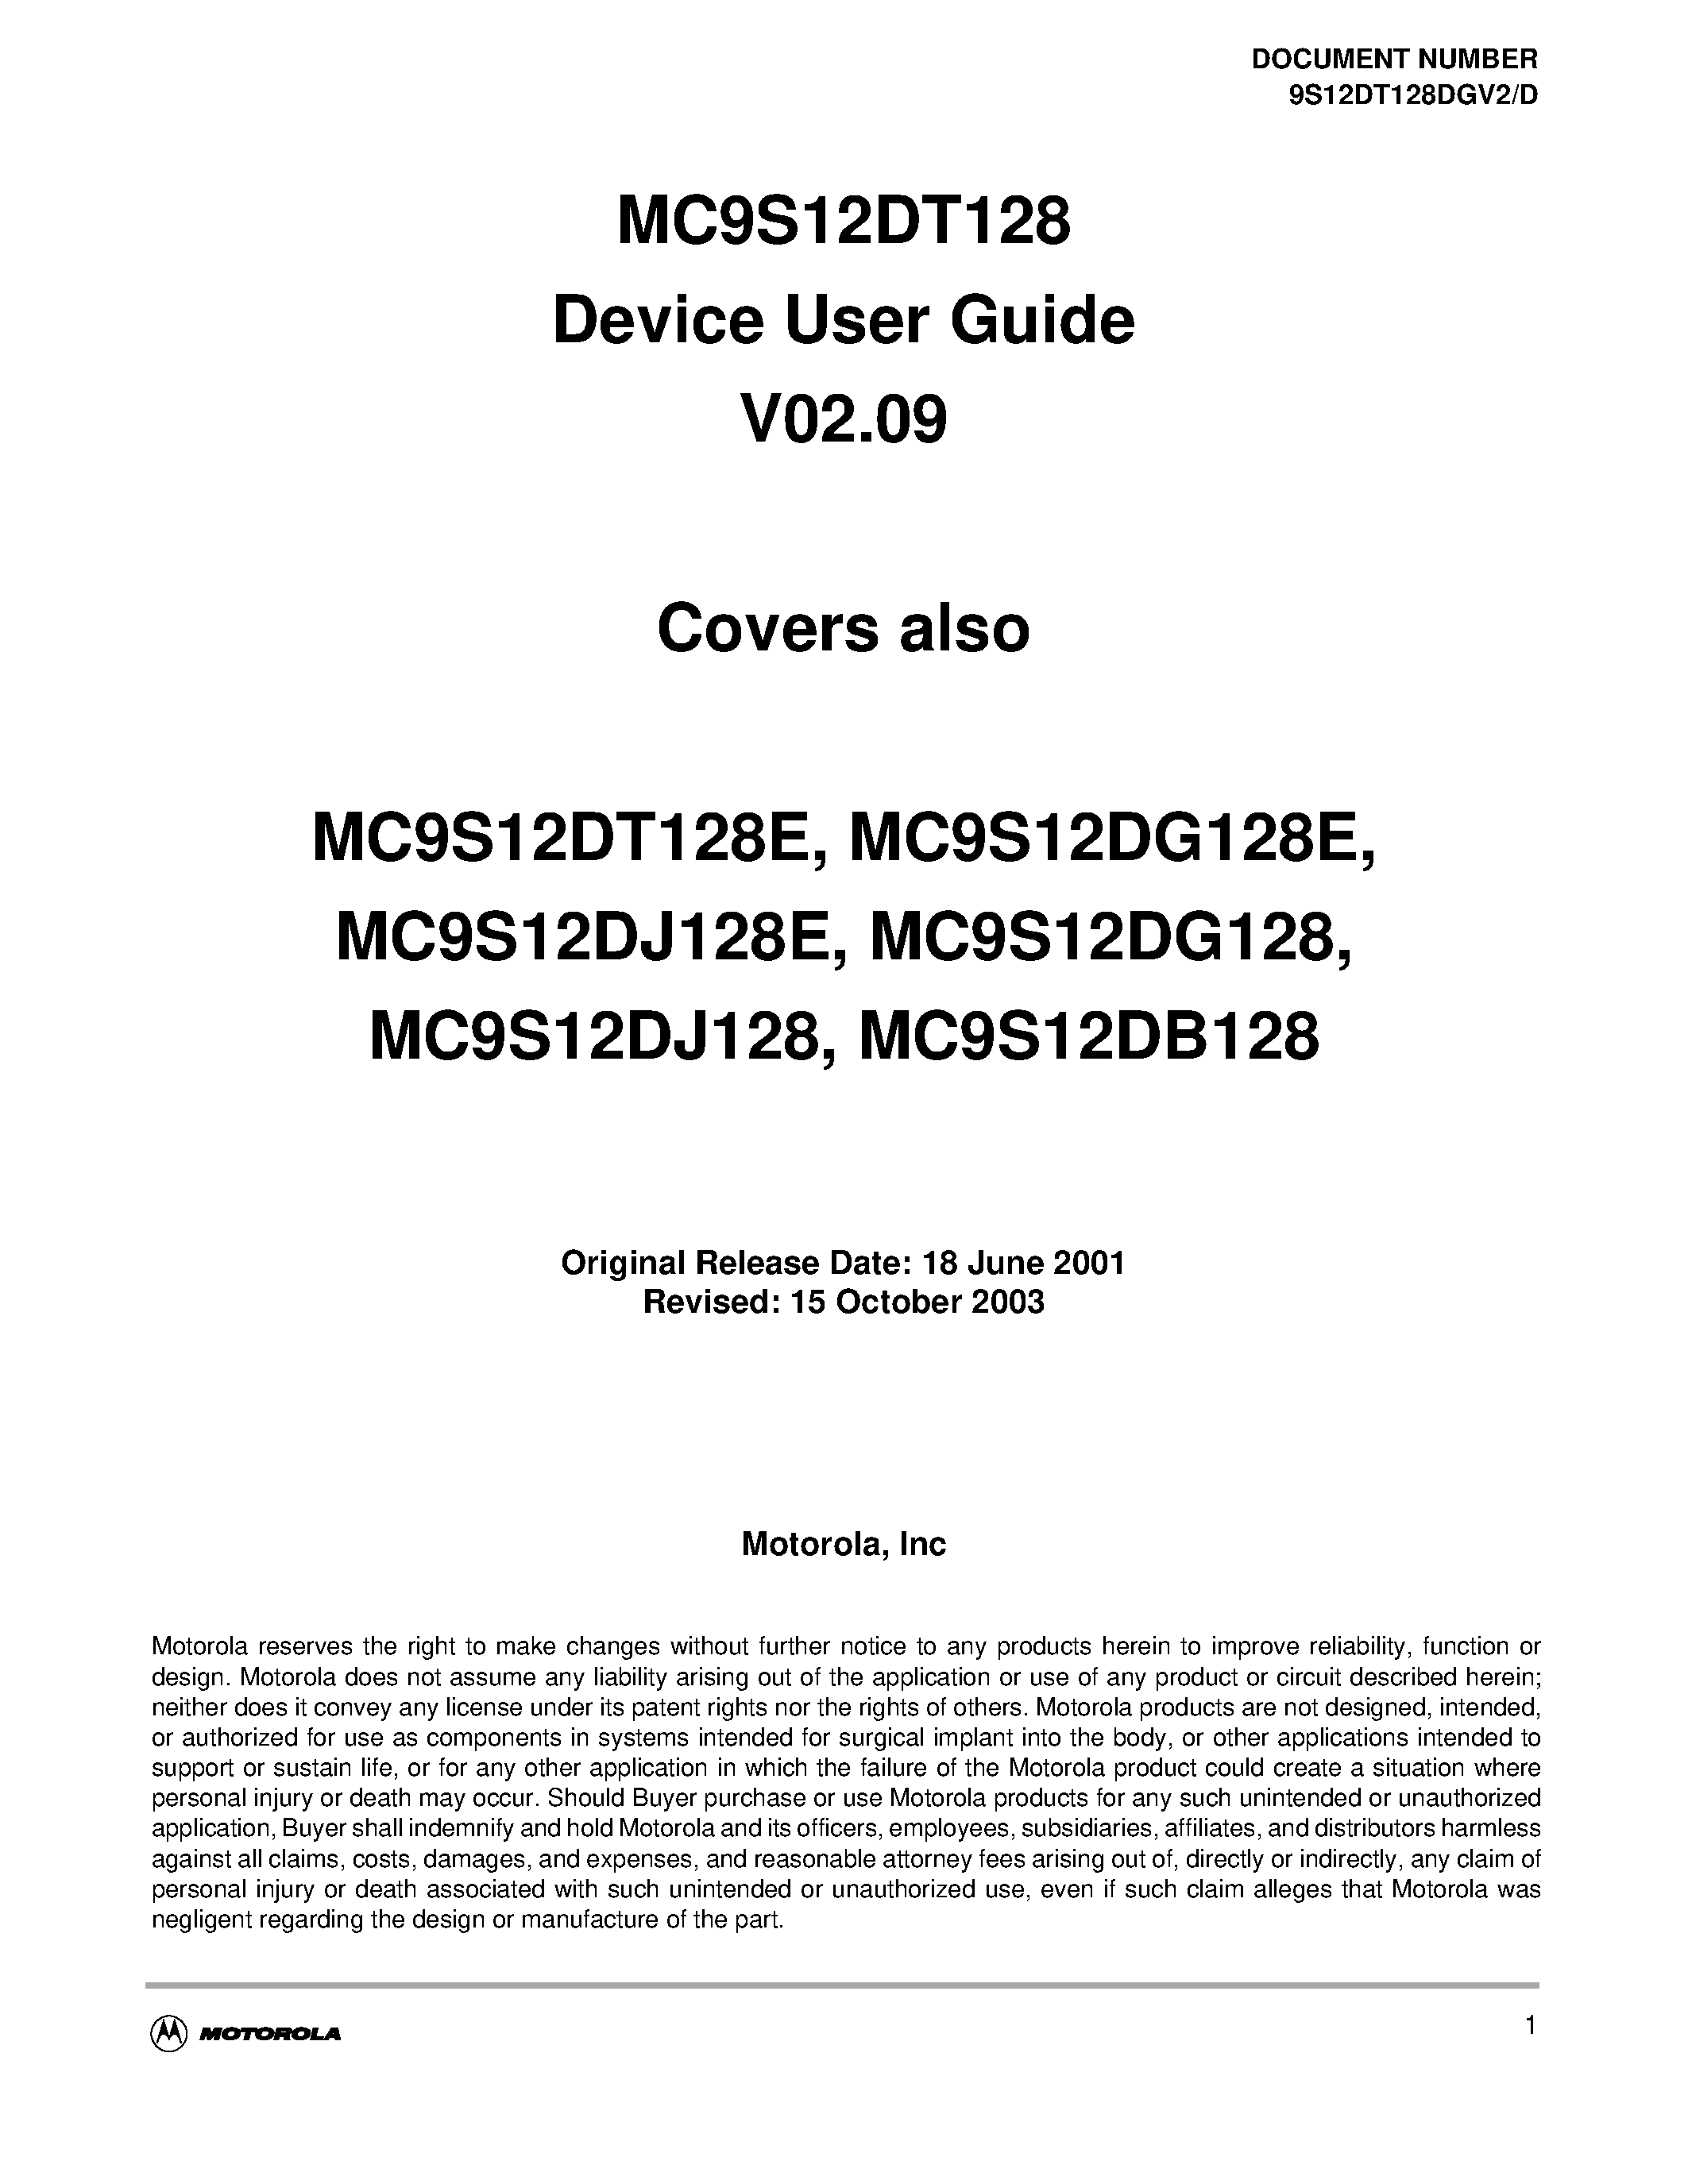 Даташит S12MEBIV3 - MC9S12DT128 Device User Guide V02.09 страница 1